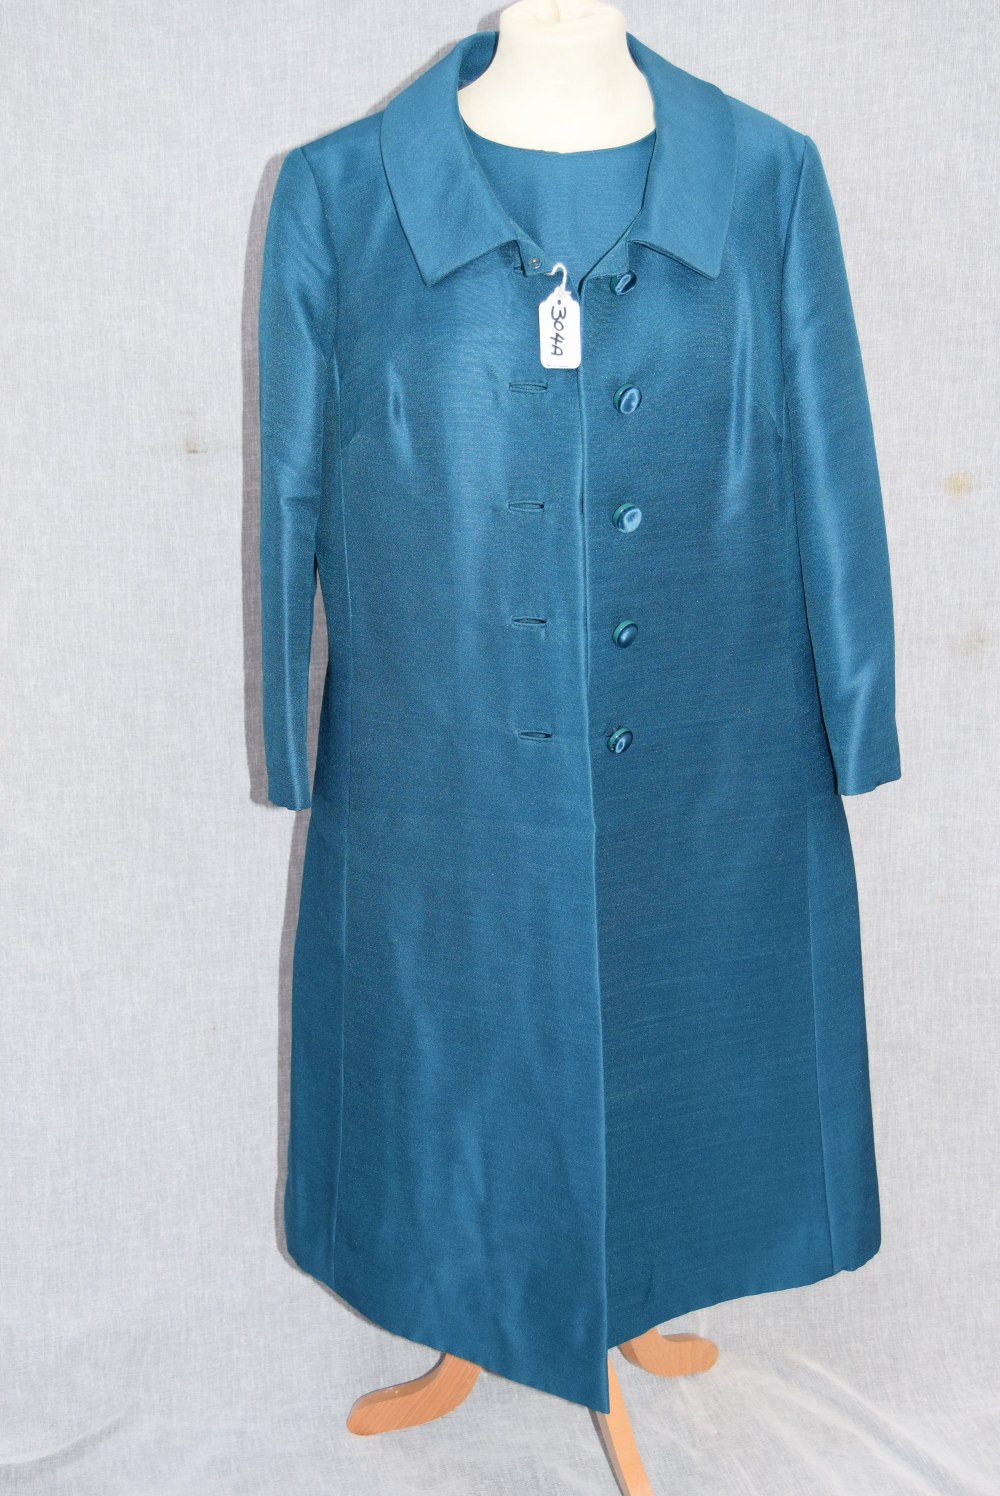 PETIT FRANCAIS; A LADIES VINTAGE 'TEAL' COLOURED DRESS, matching 3/4 sleeve coat, circa 1960's